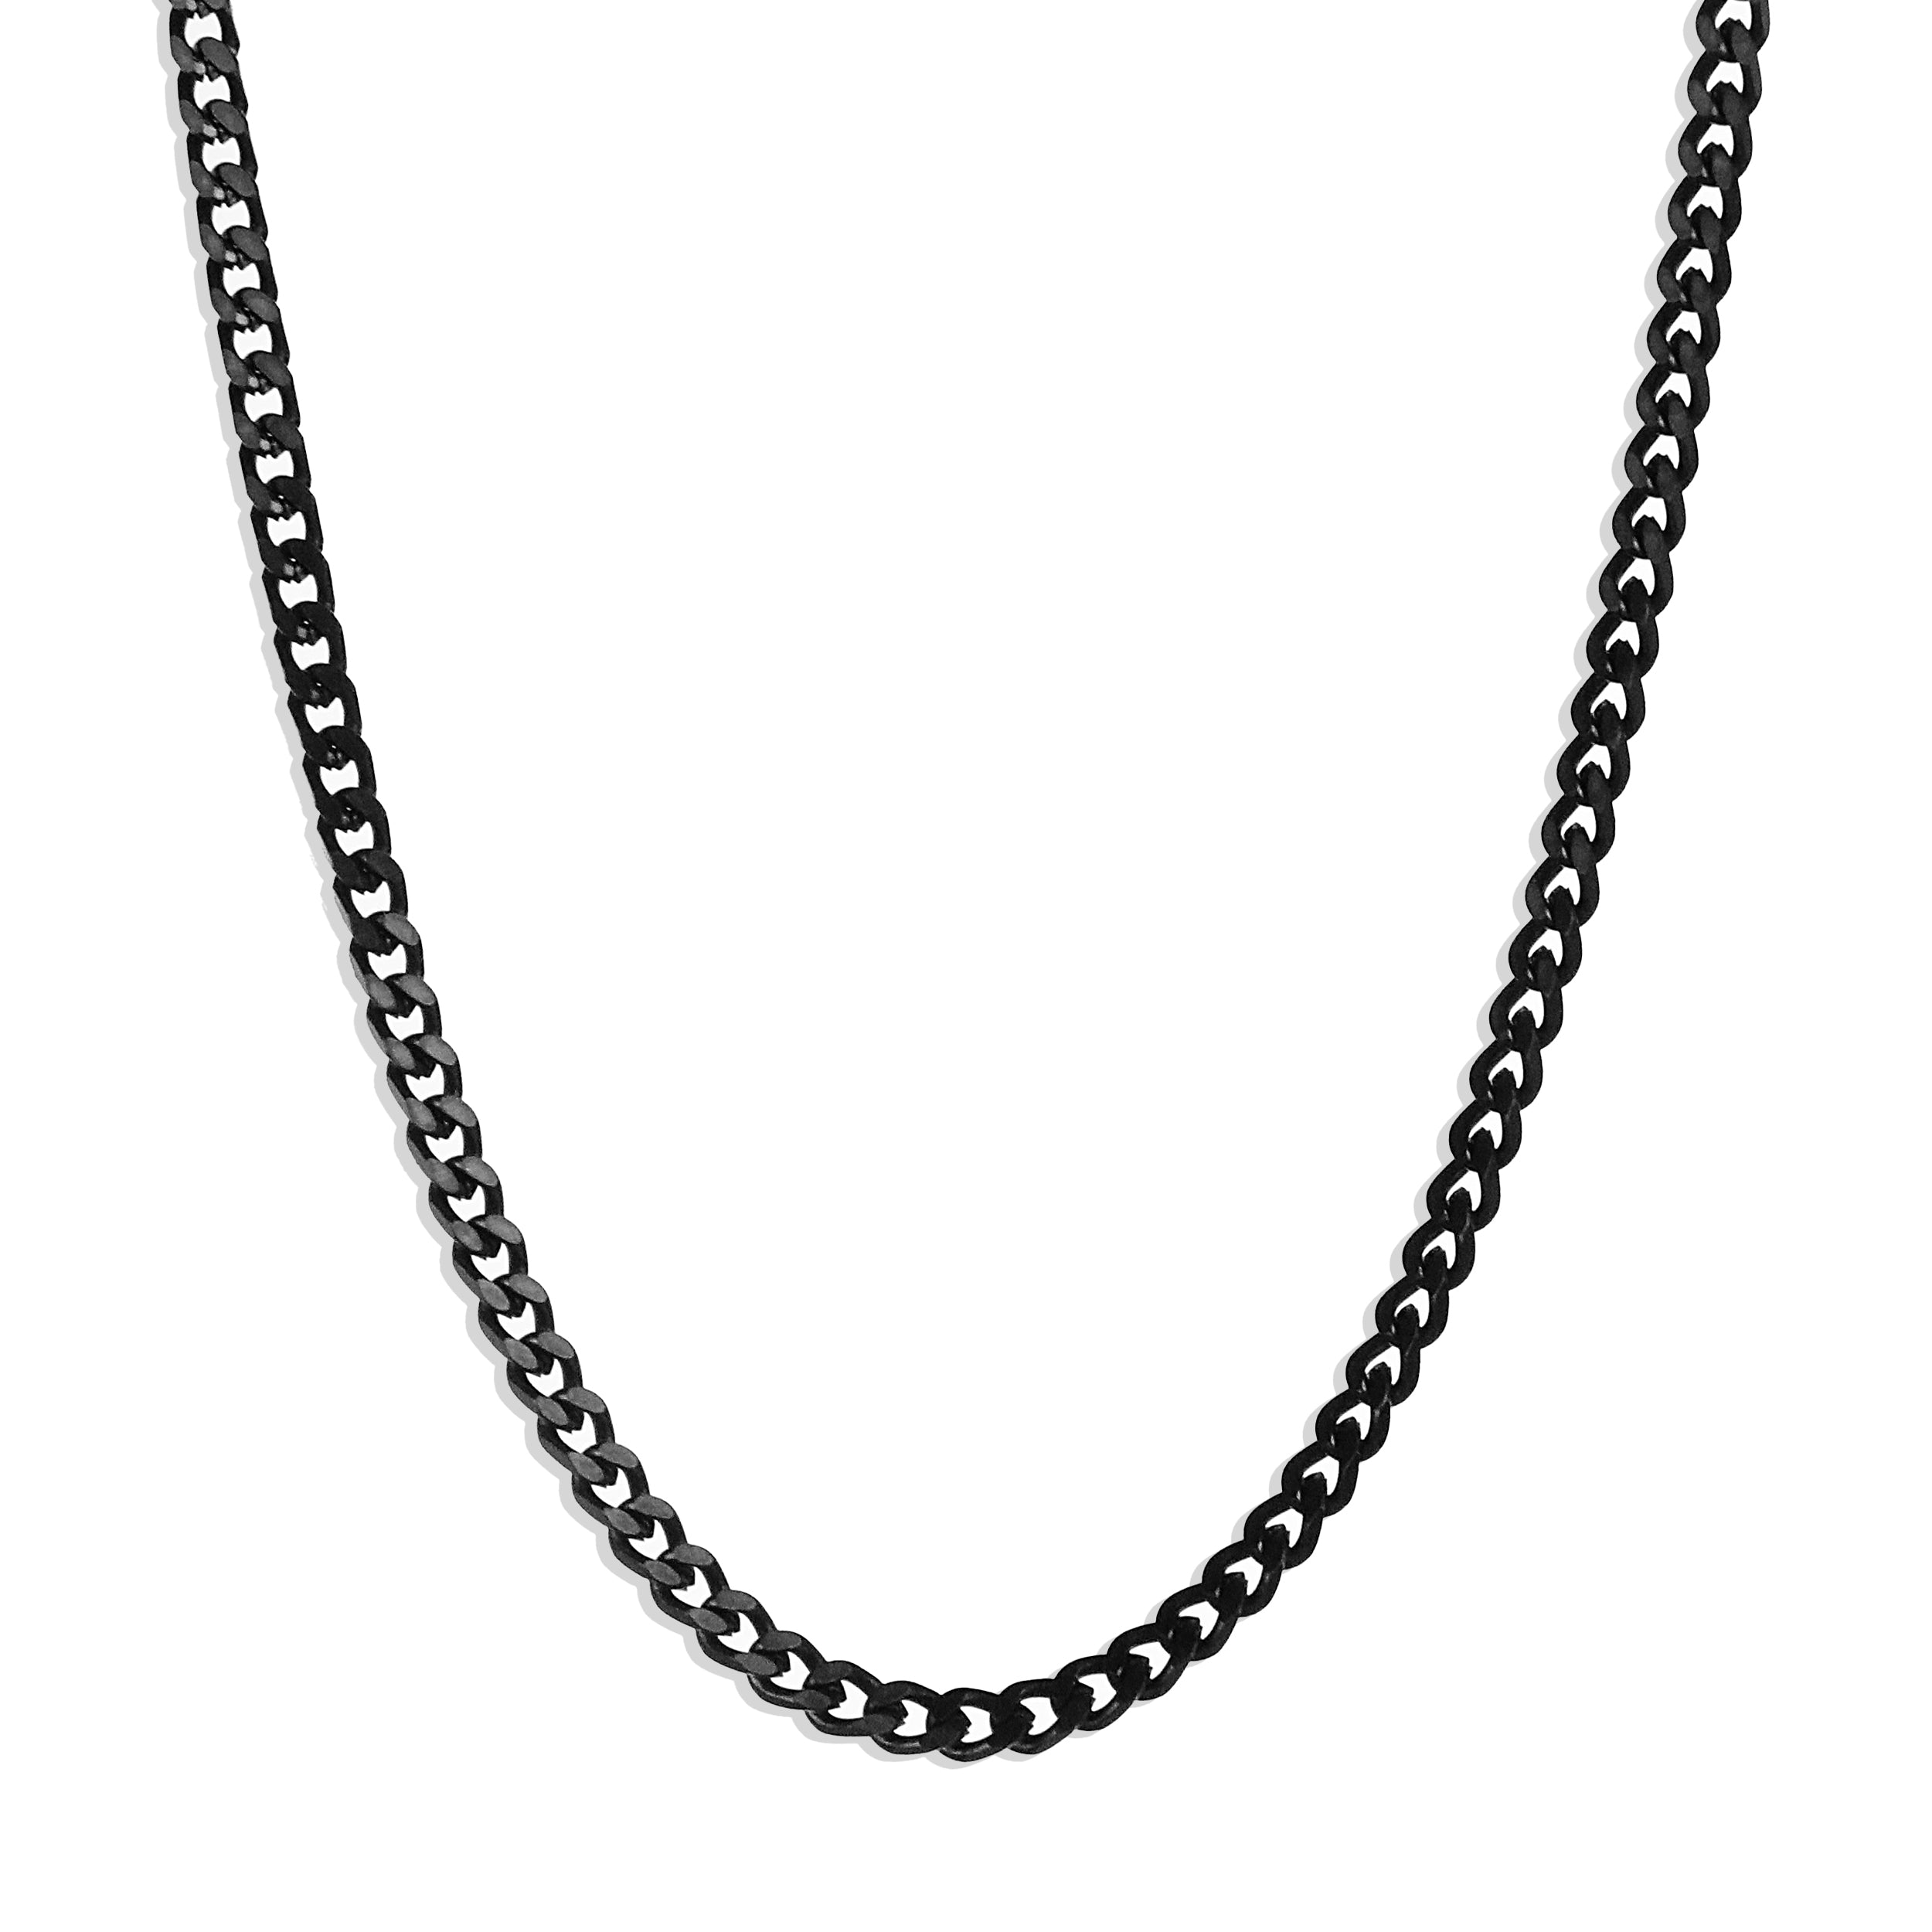 Cuban Chain Necklace - Black 3mm